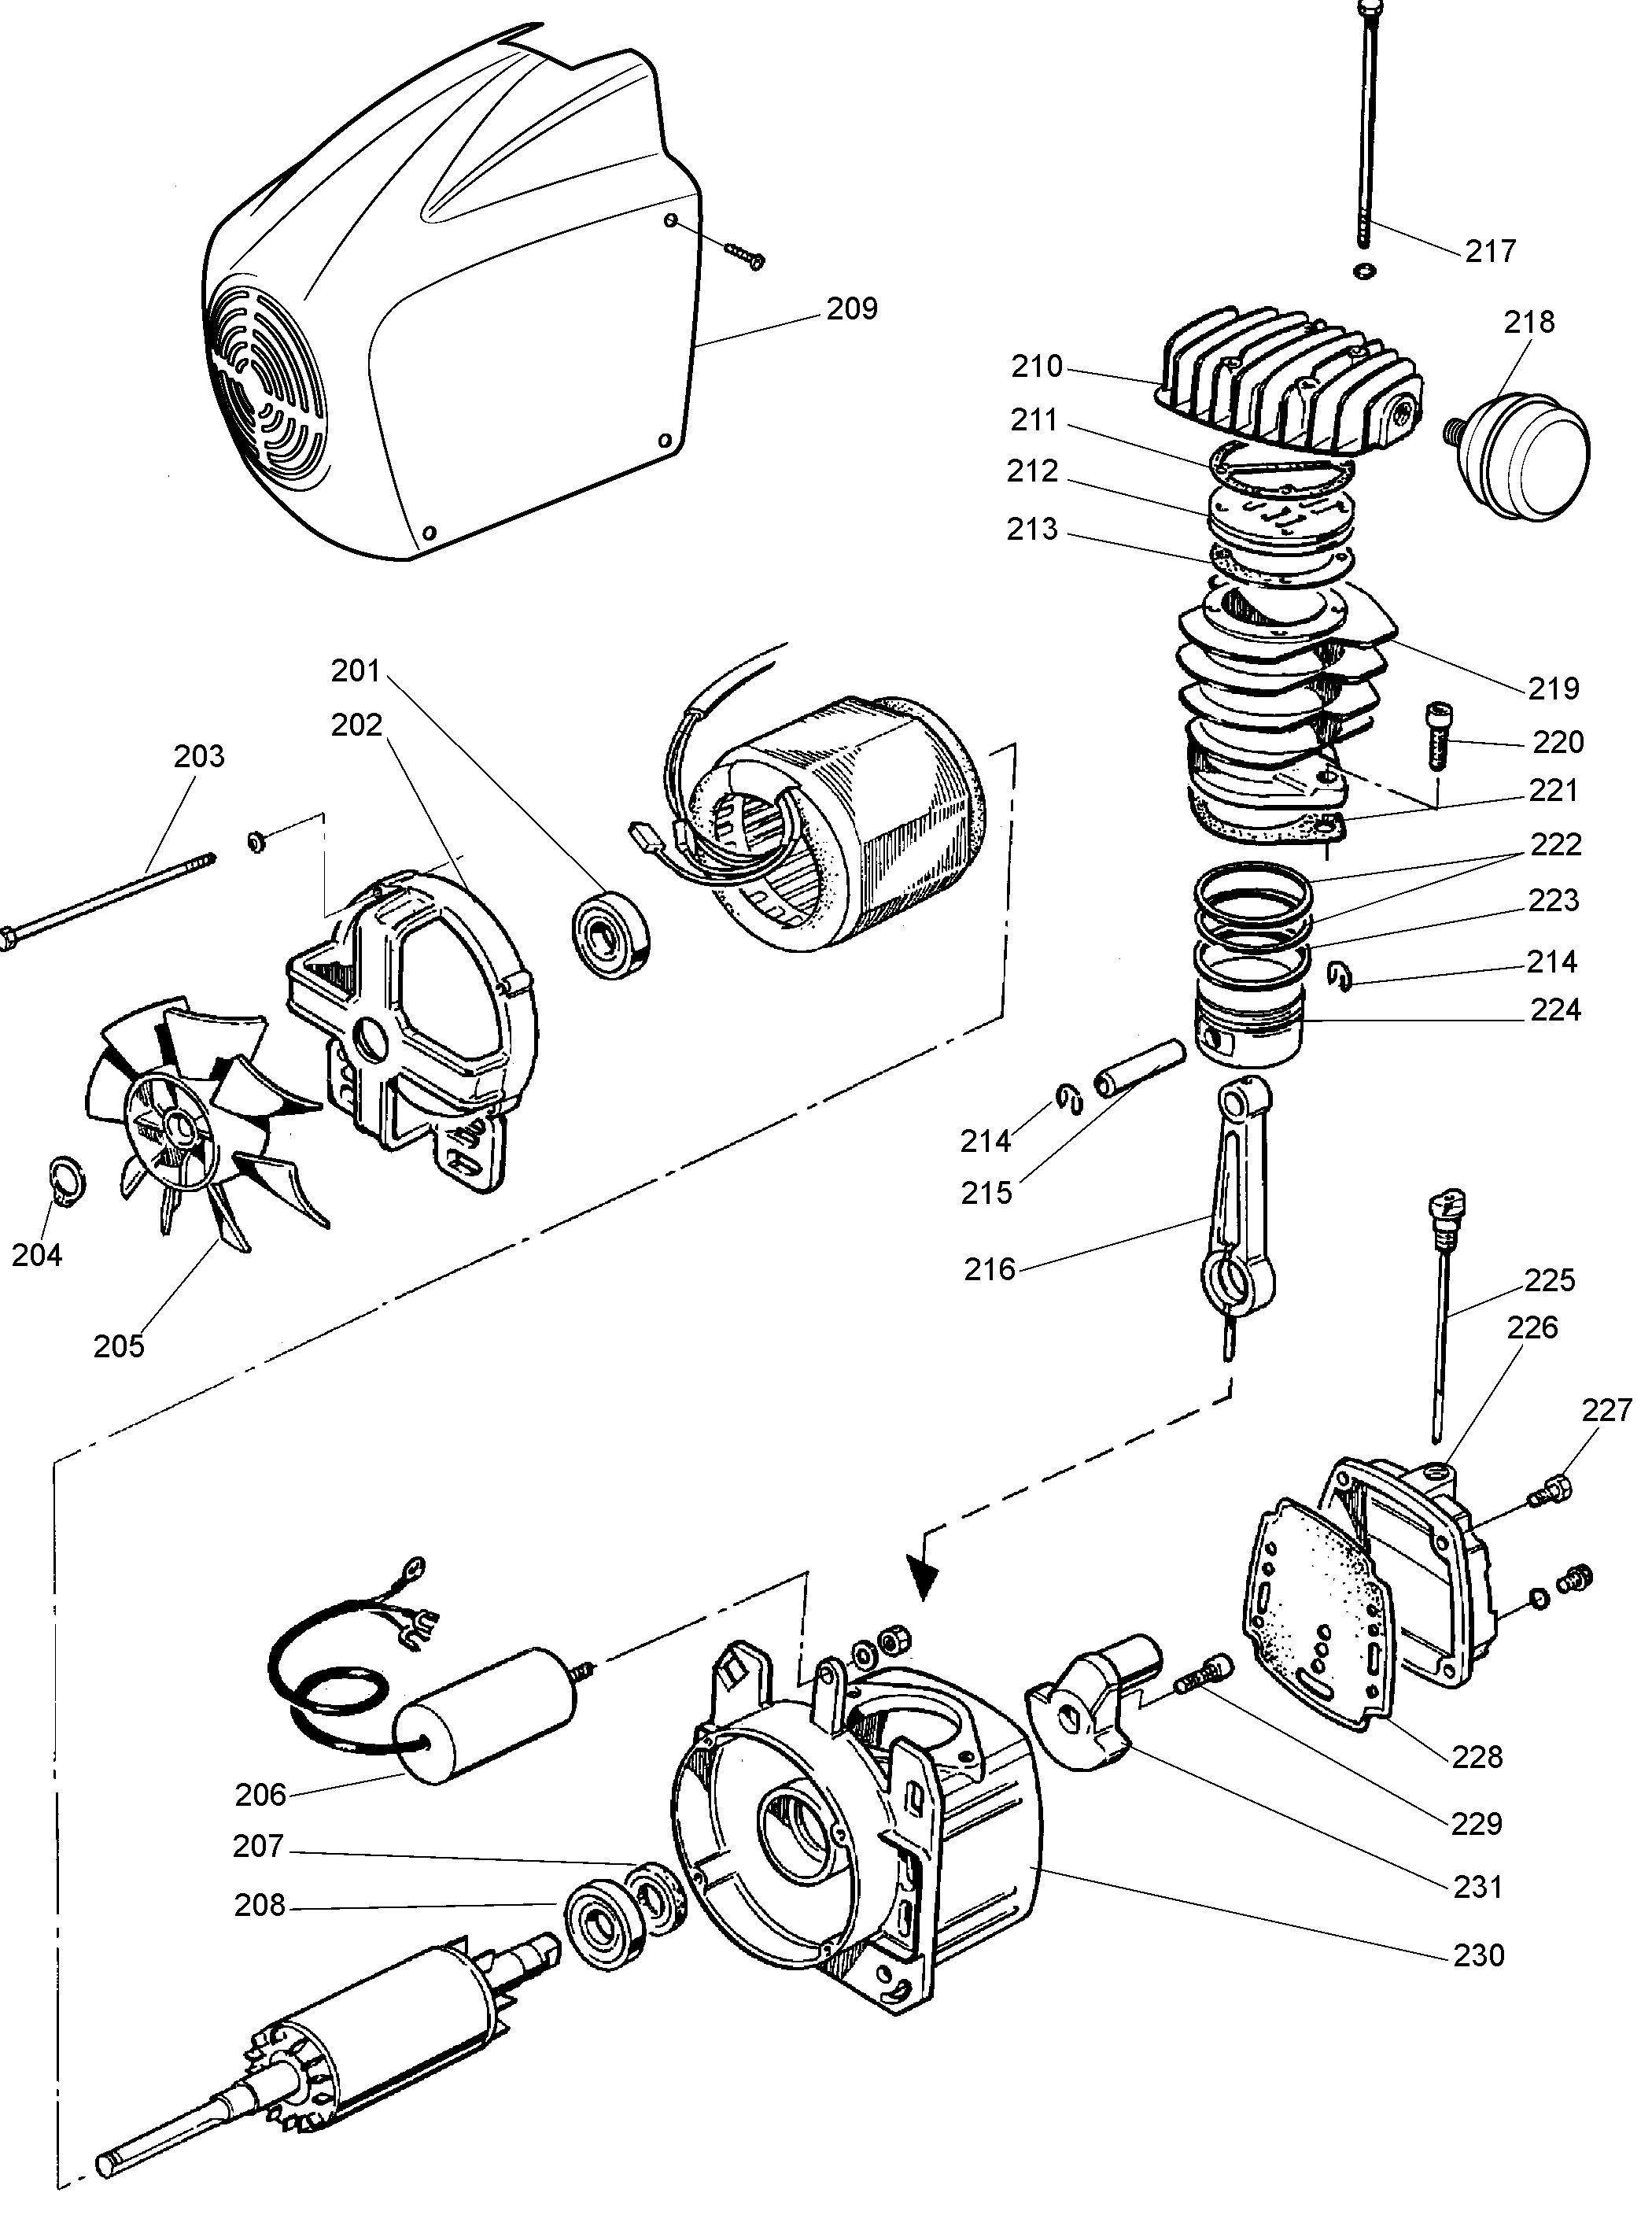 Bostitch Air Compressor Parts Diagram Bostitch Btfp Parts Master tool Repair Of Bostitch Air Compressor Parts Diagram